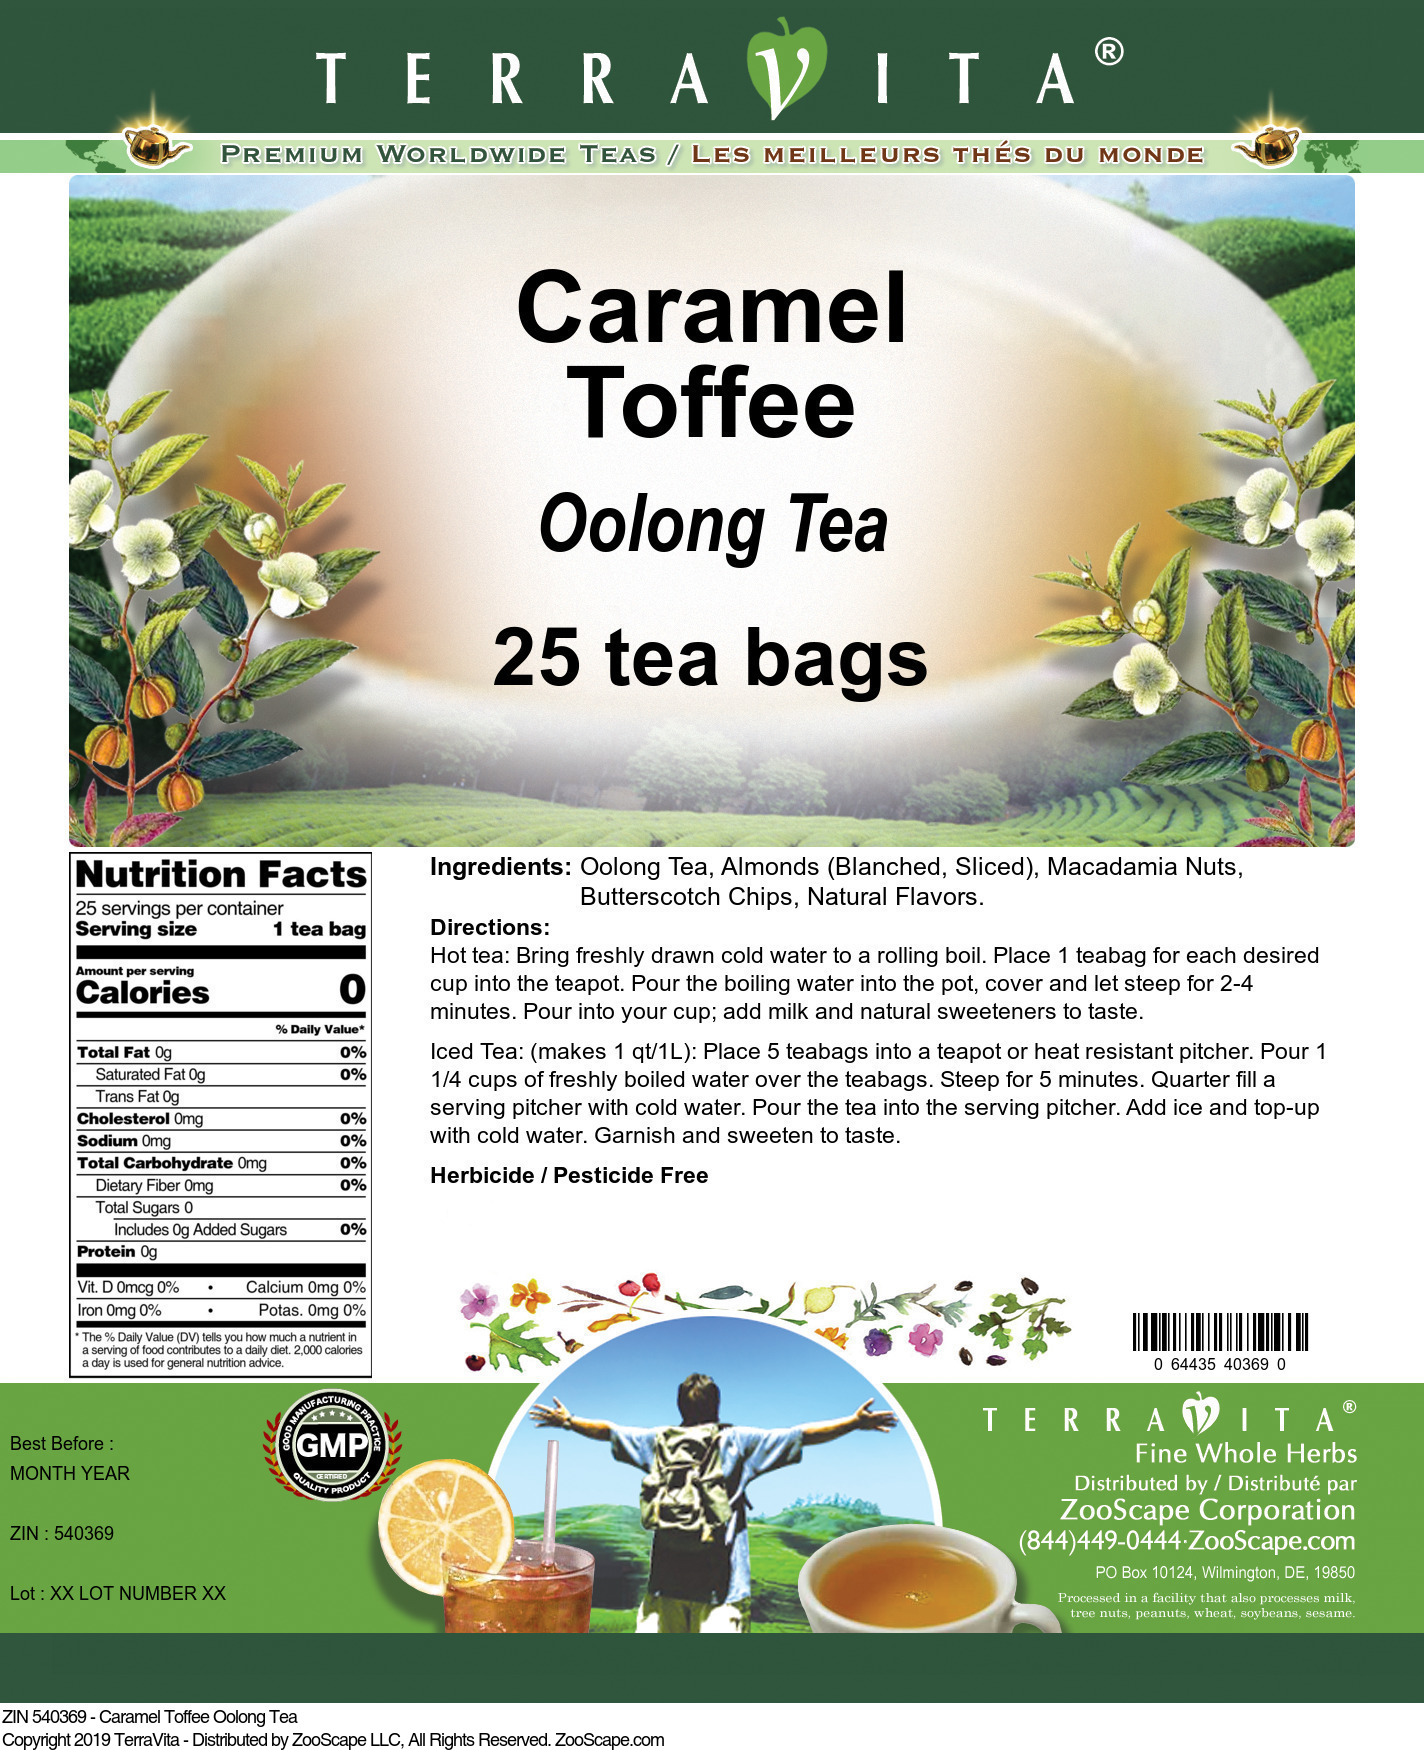 Caramel Toffee Oolong Tea - Label